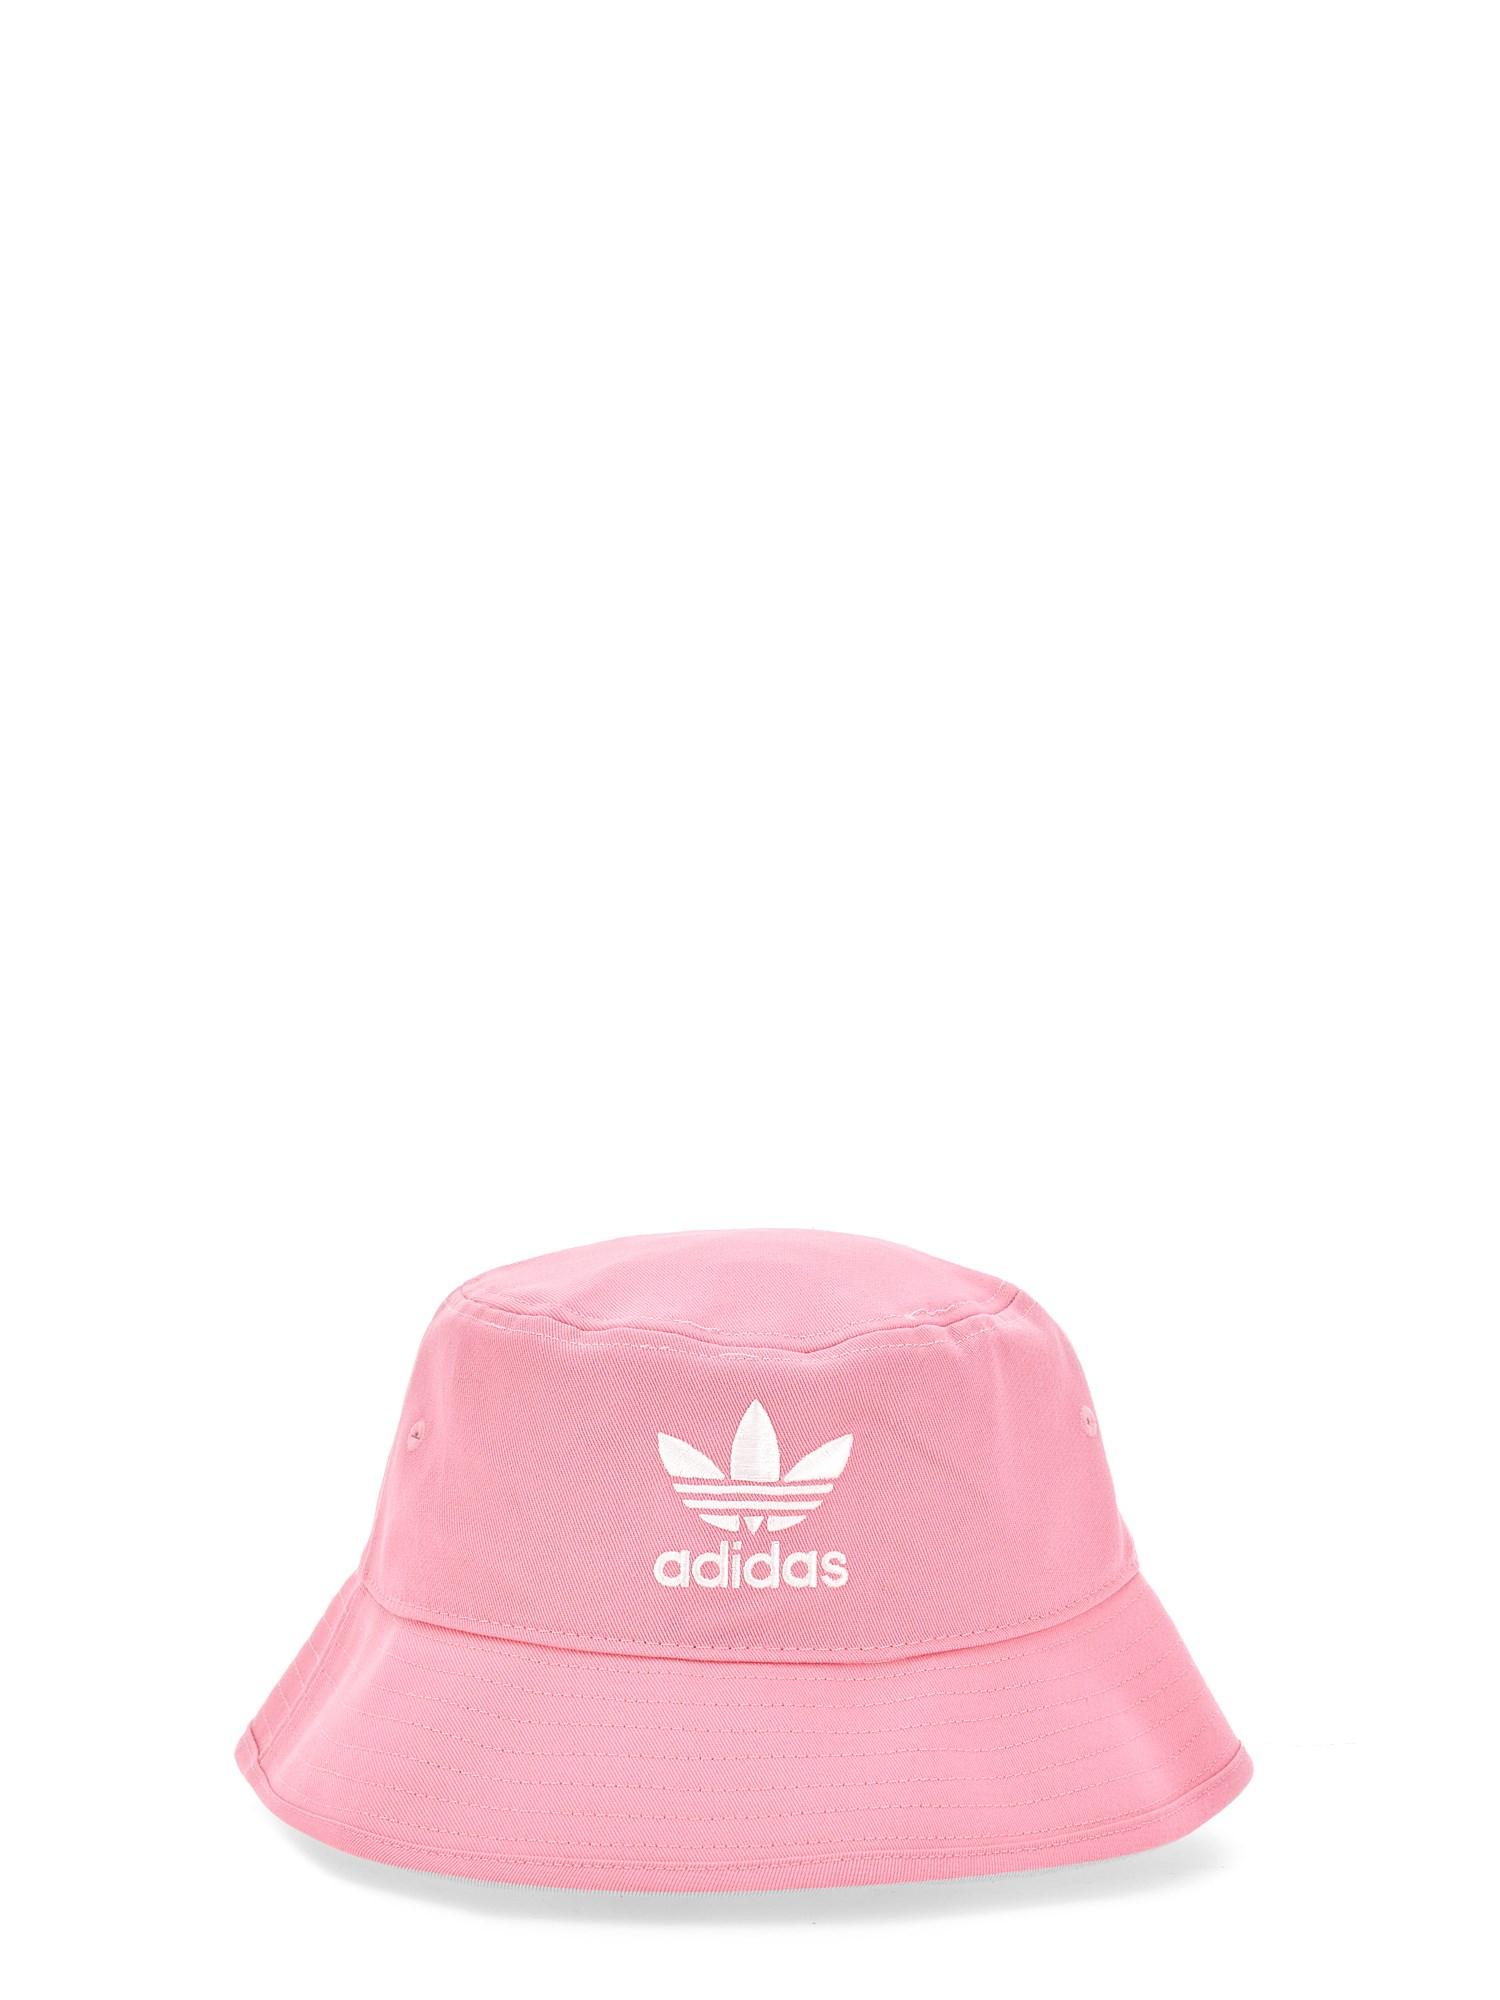 adidas Originals Cotton Bucket Hat With Logo in Pink - Save 24% | Lyst